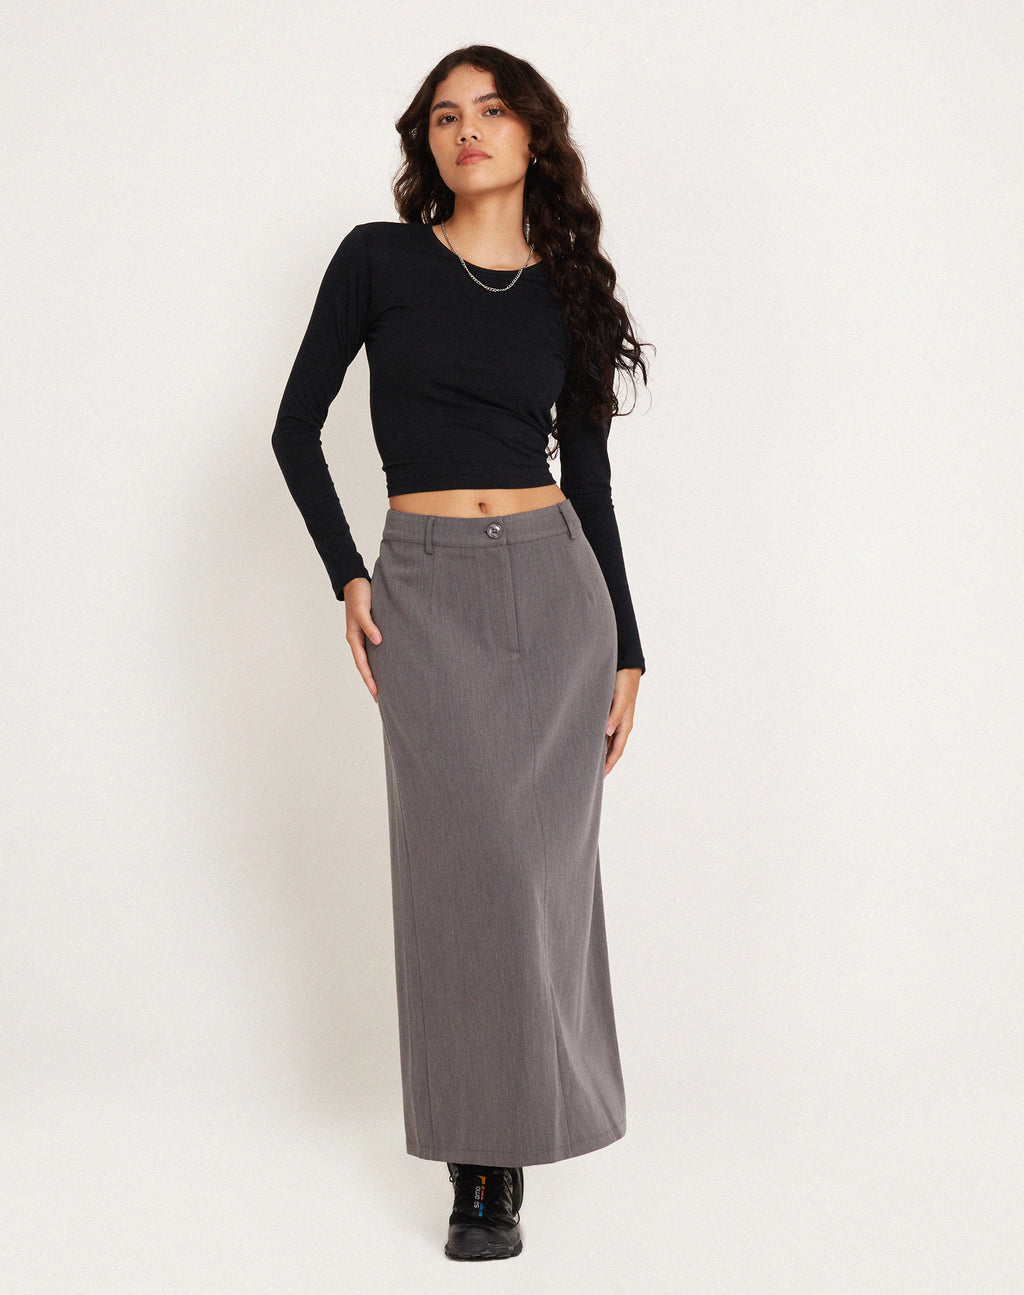 Lanula Midi Skirt in Tailoring Charcoal